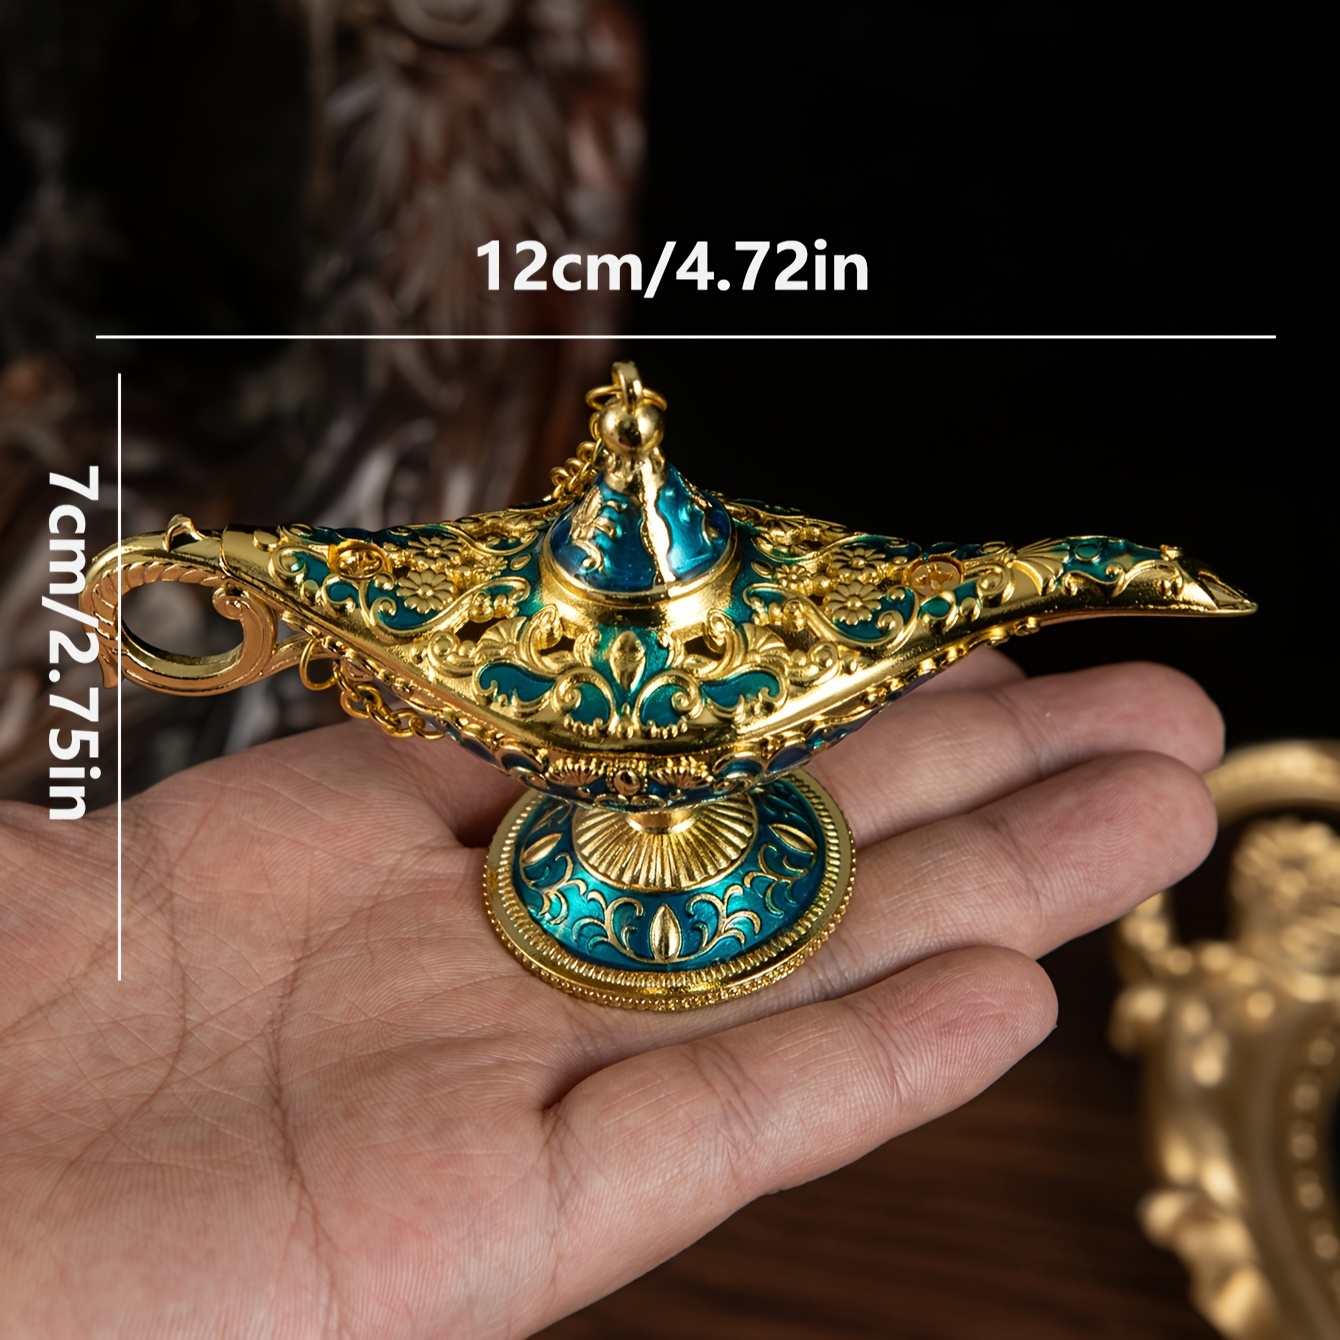 Buy A Wholesale Souvenir Aladdin Lamp For Home Use 